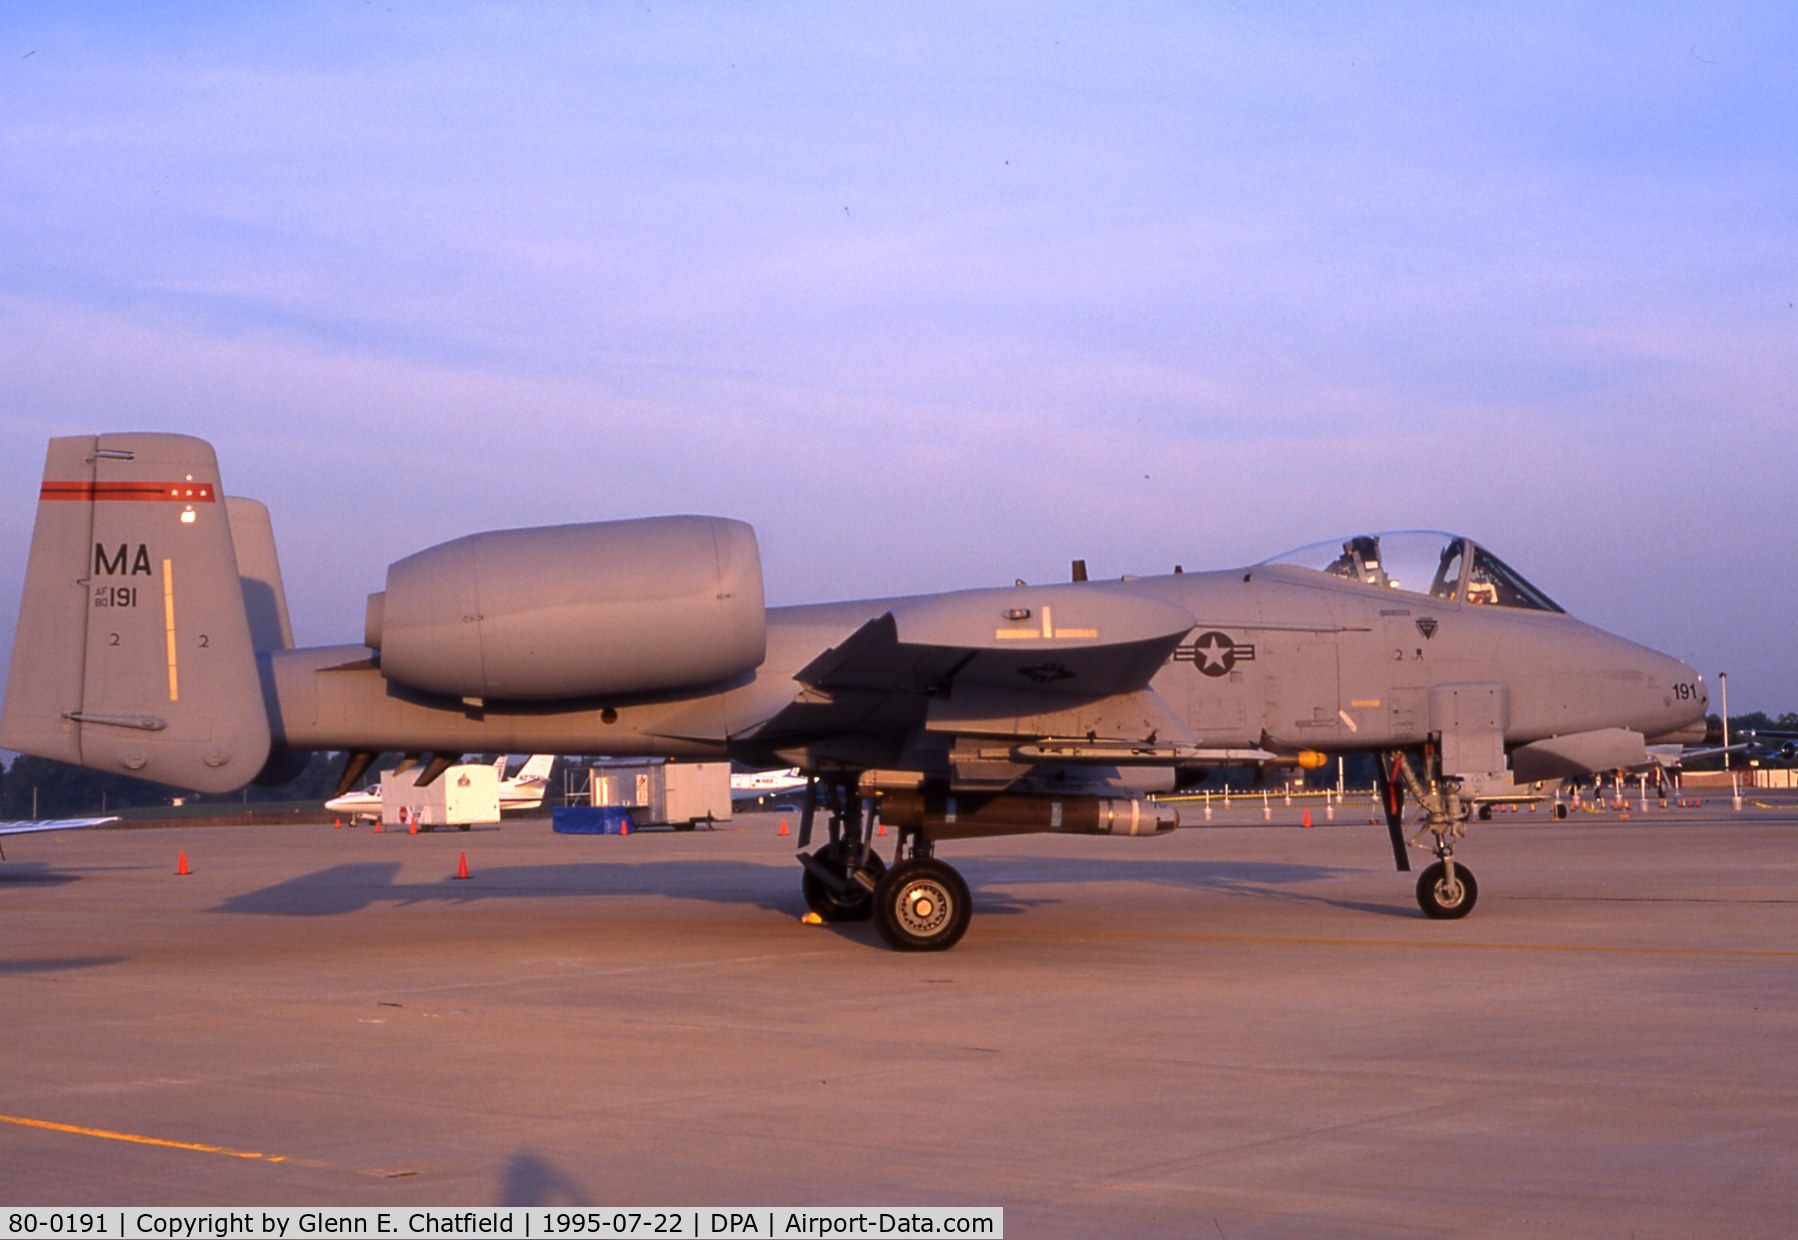 80-0191, 1980 Fairchild Republic A-10A Thunderbolt II C/N A10-0541, A-10A on the ramp just after dawn